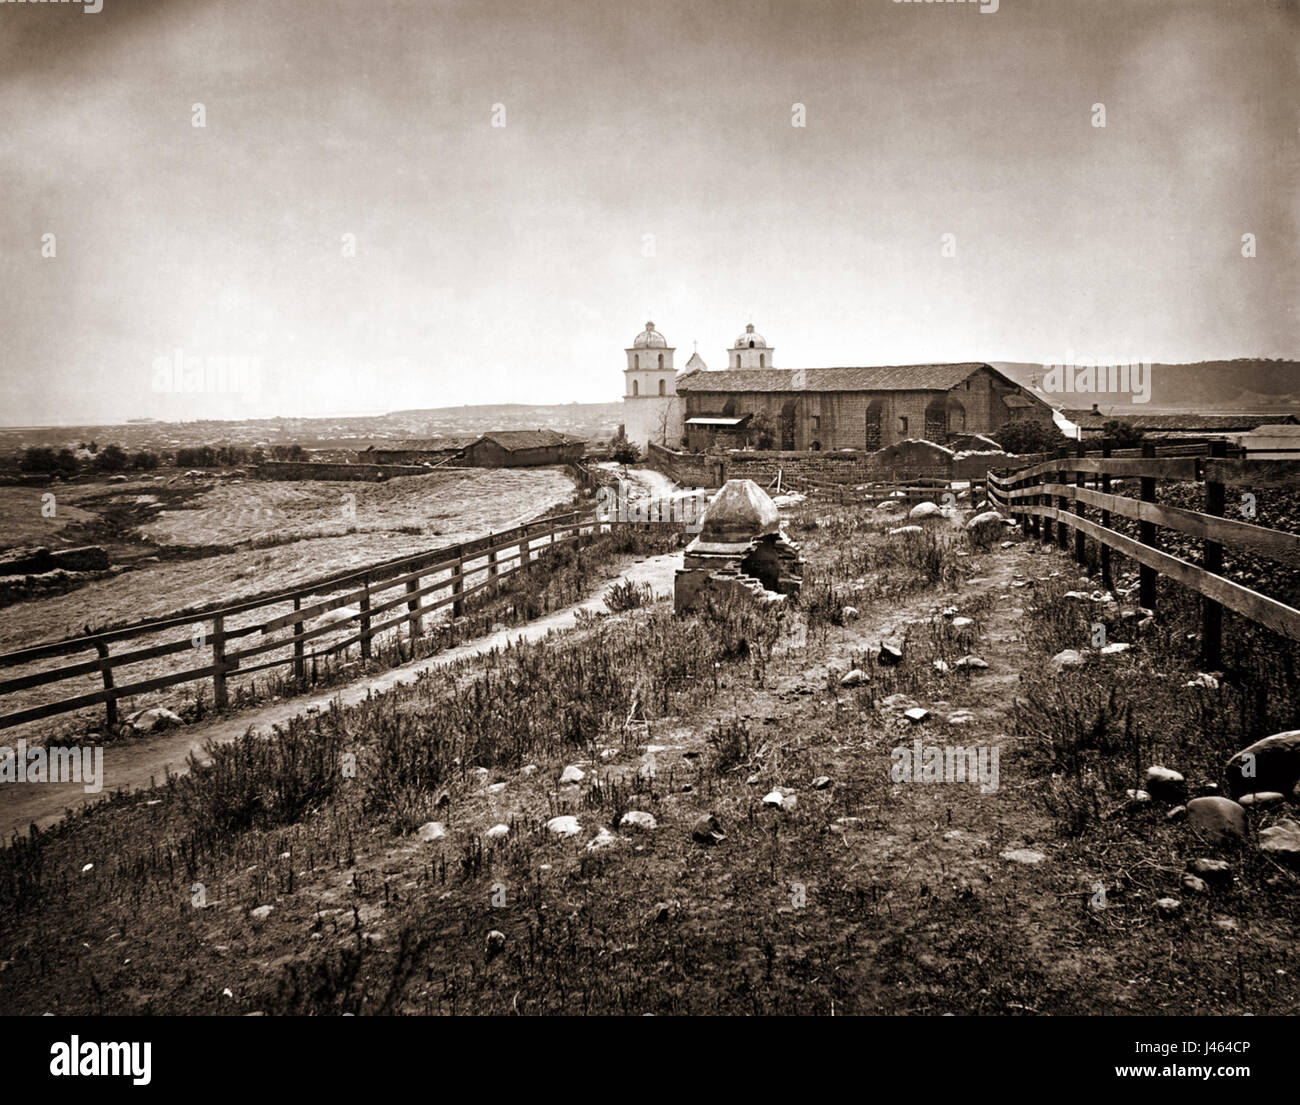 Mission Santa Barbara rear view by Carleton Watkins, 1876 Stock Photo